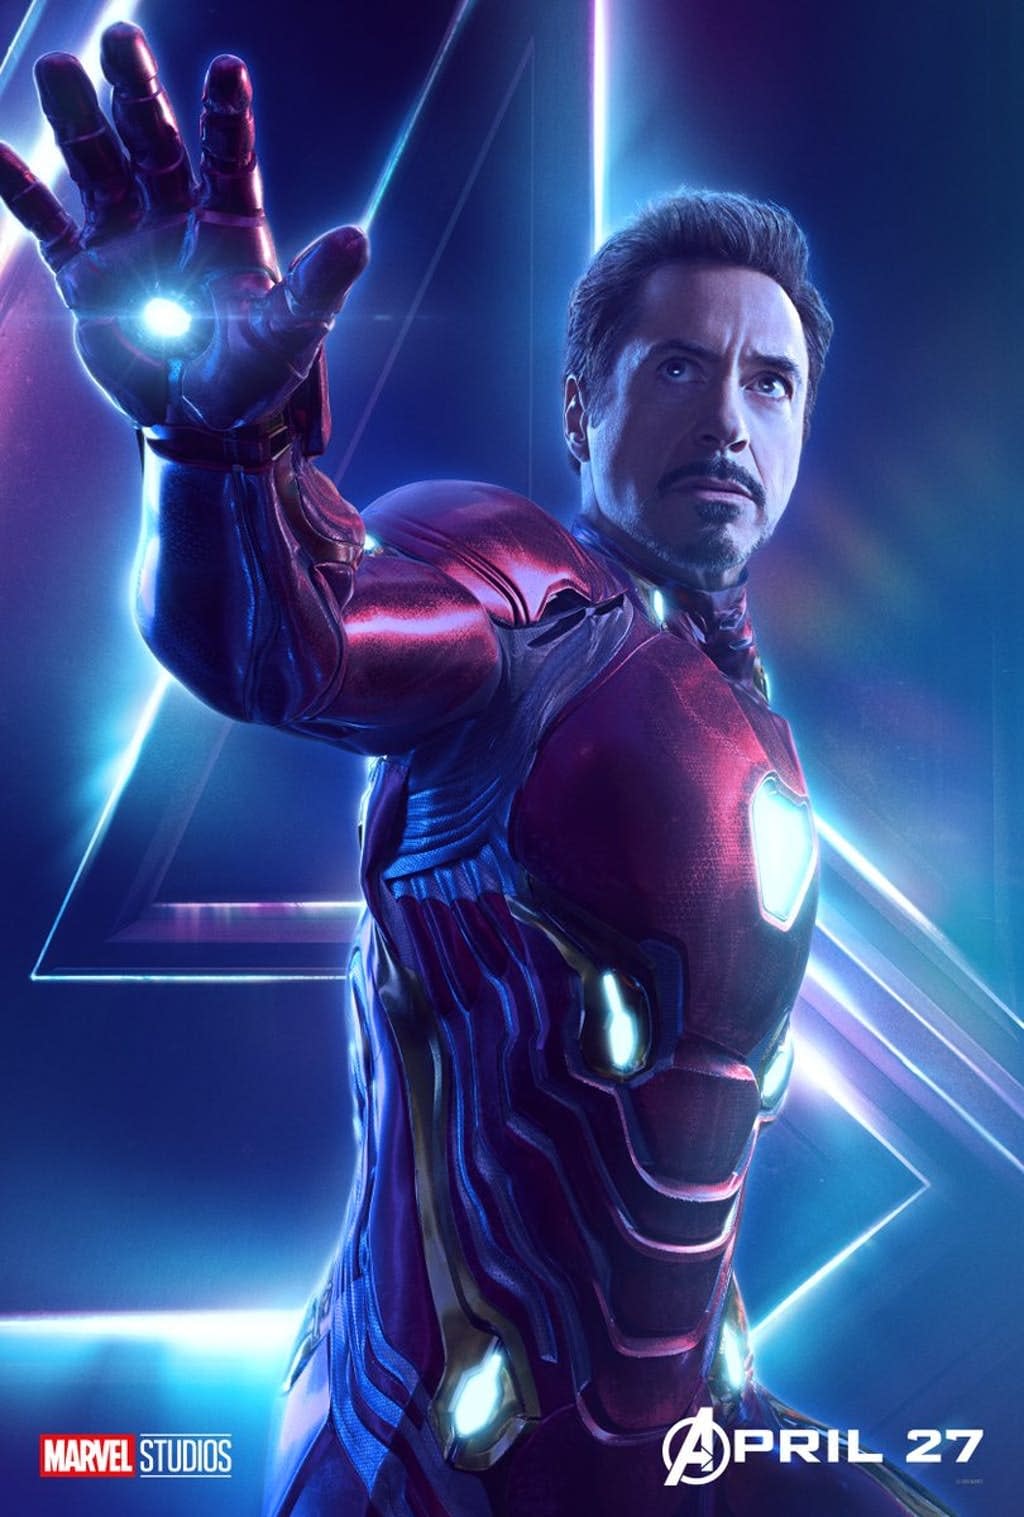 Avengers: Infinity War Directors Talks Robert Downey Jr. Place in the Marvel Cinematic Universe